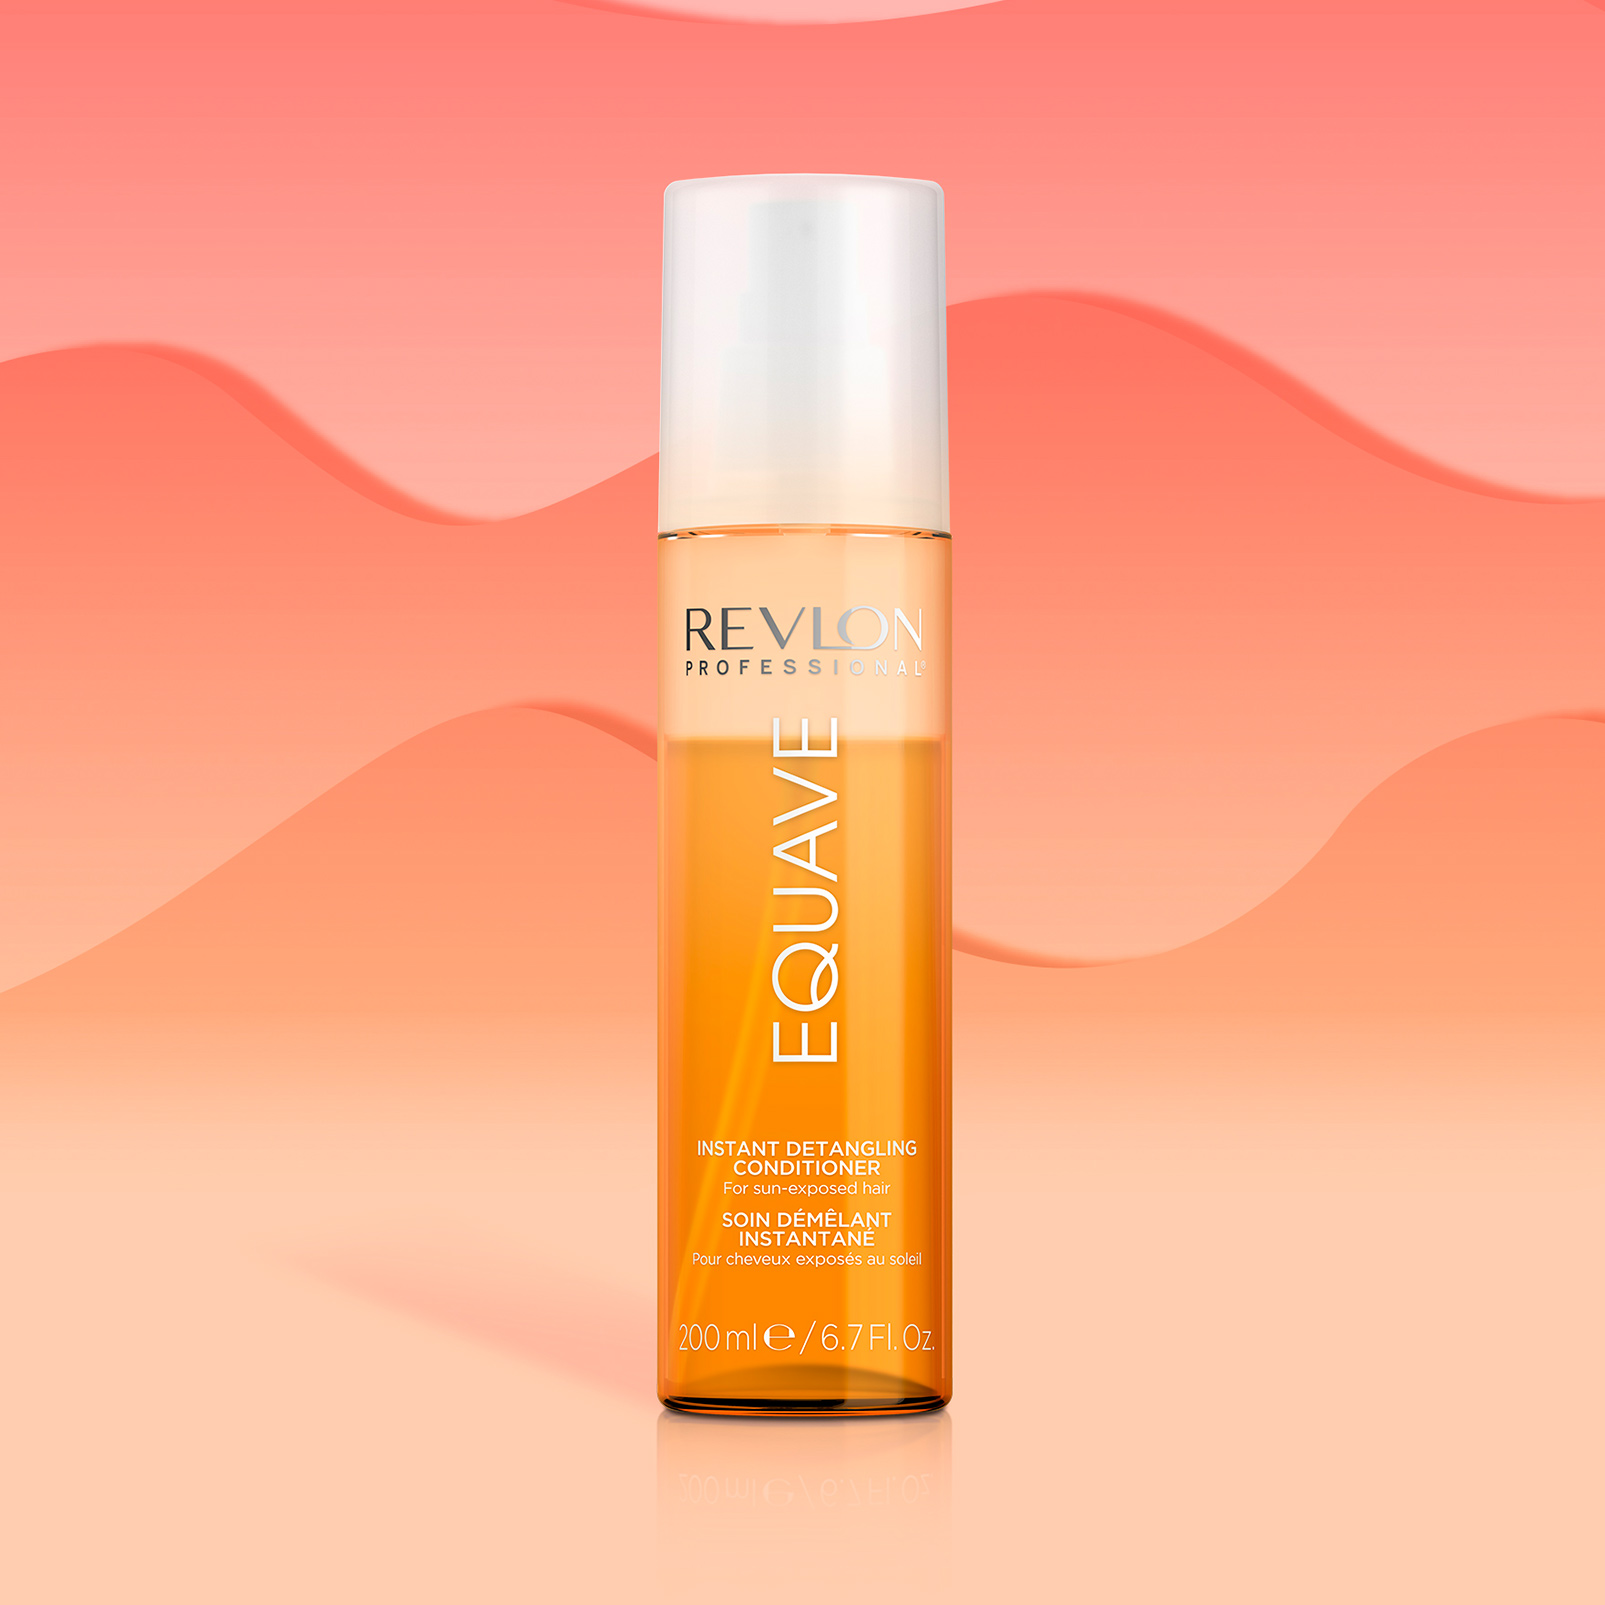 Professional Professional Revlon hair Leave-in - conditioner Revlon Instant sun-exposed for Equave™ Detangling